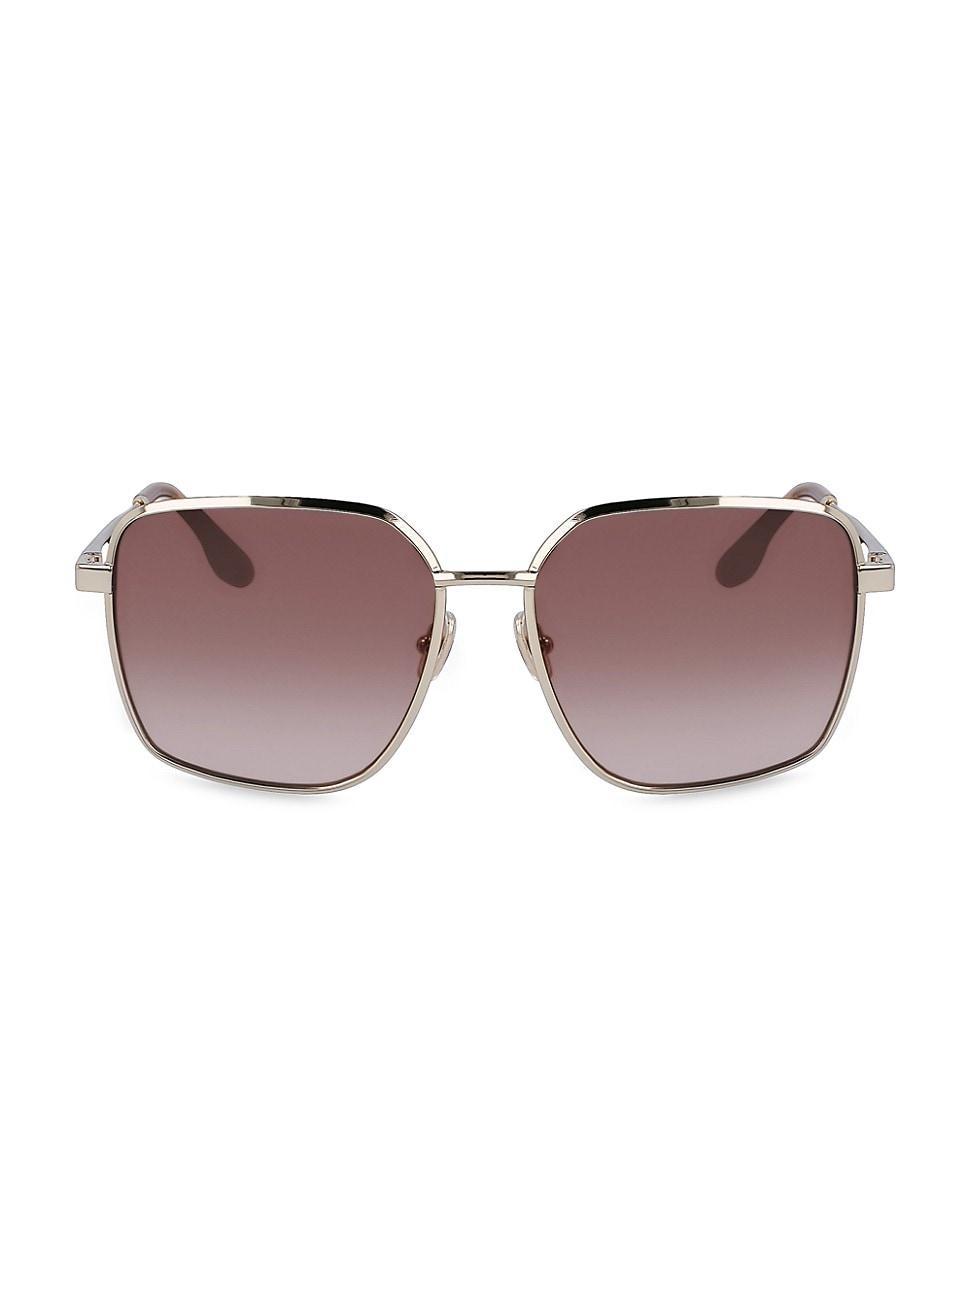 Longchamp 58mm Gradient Rectangular Sunglasses Product Image